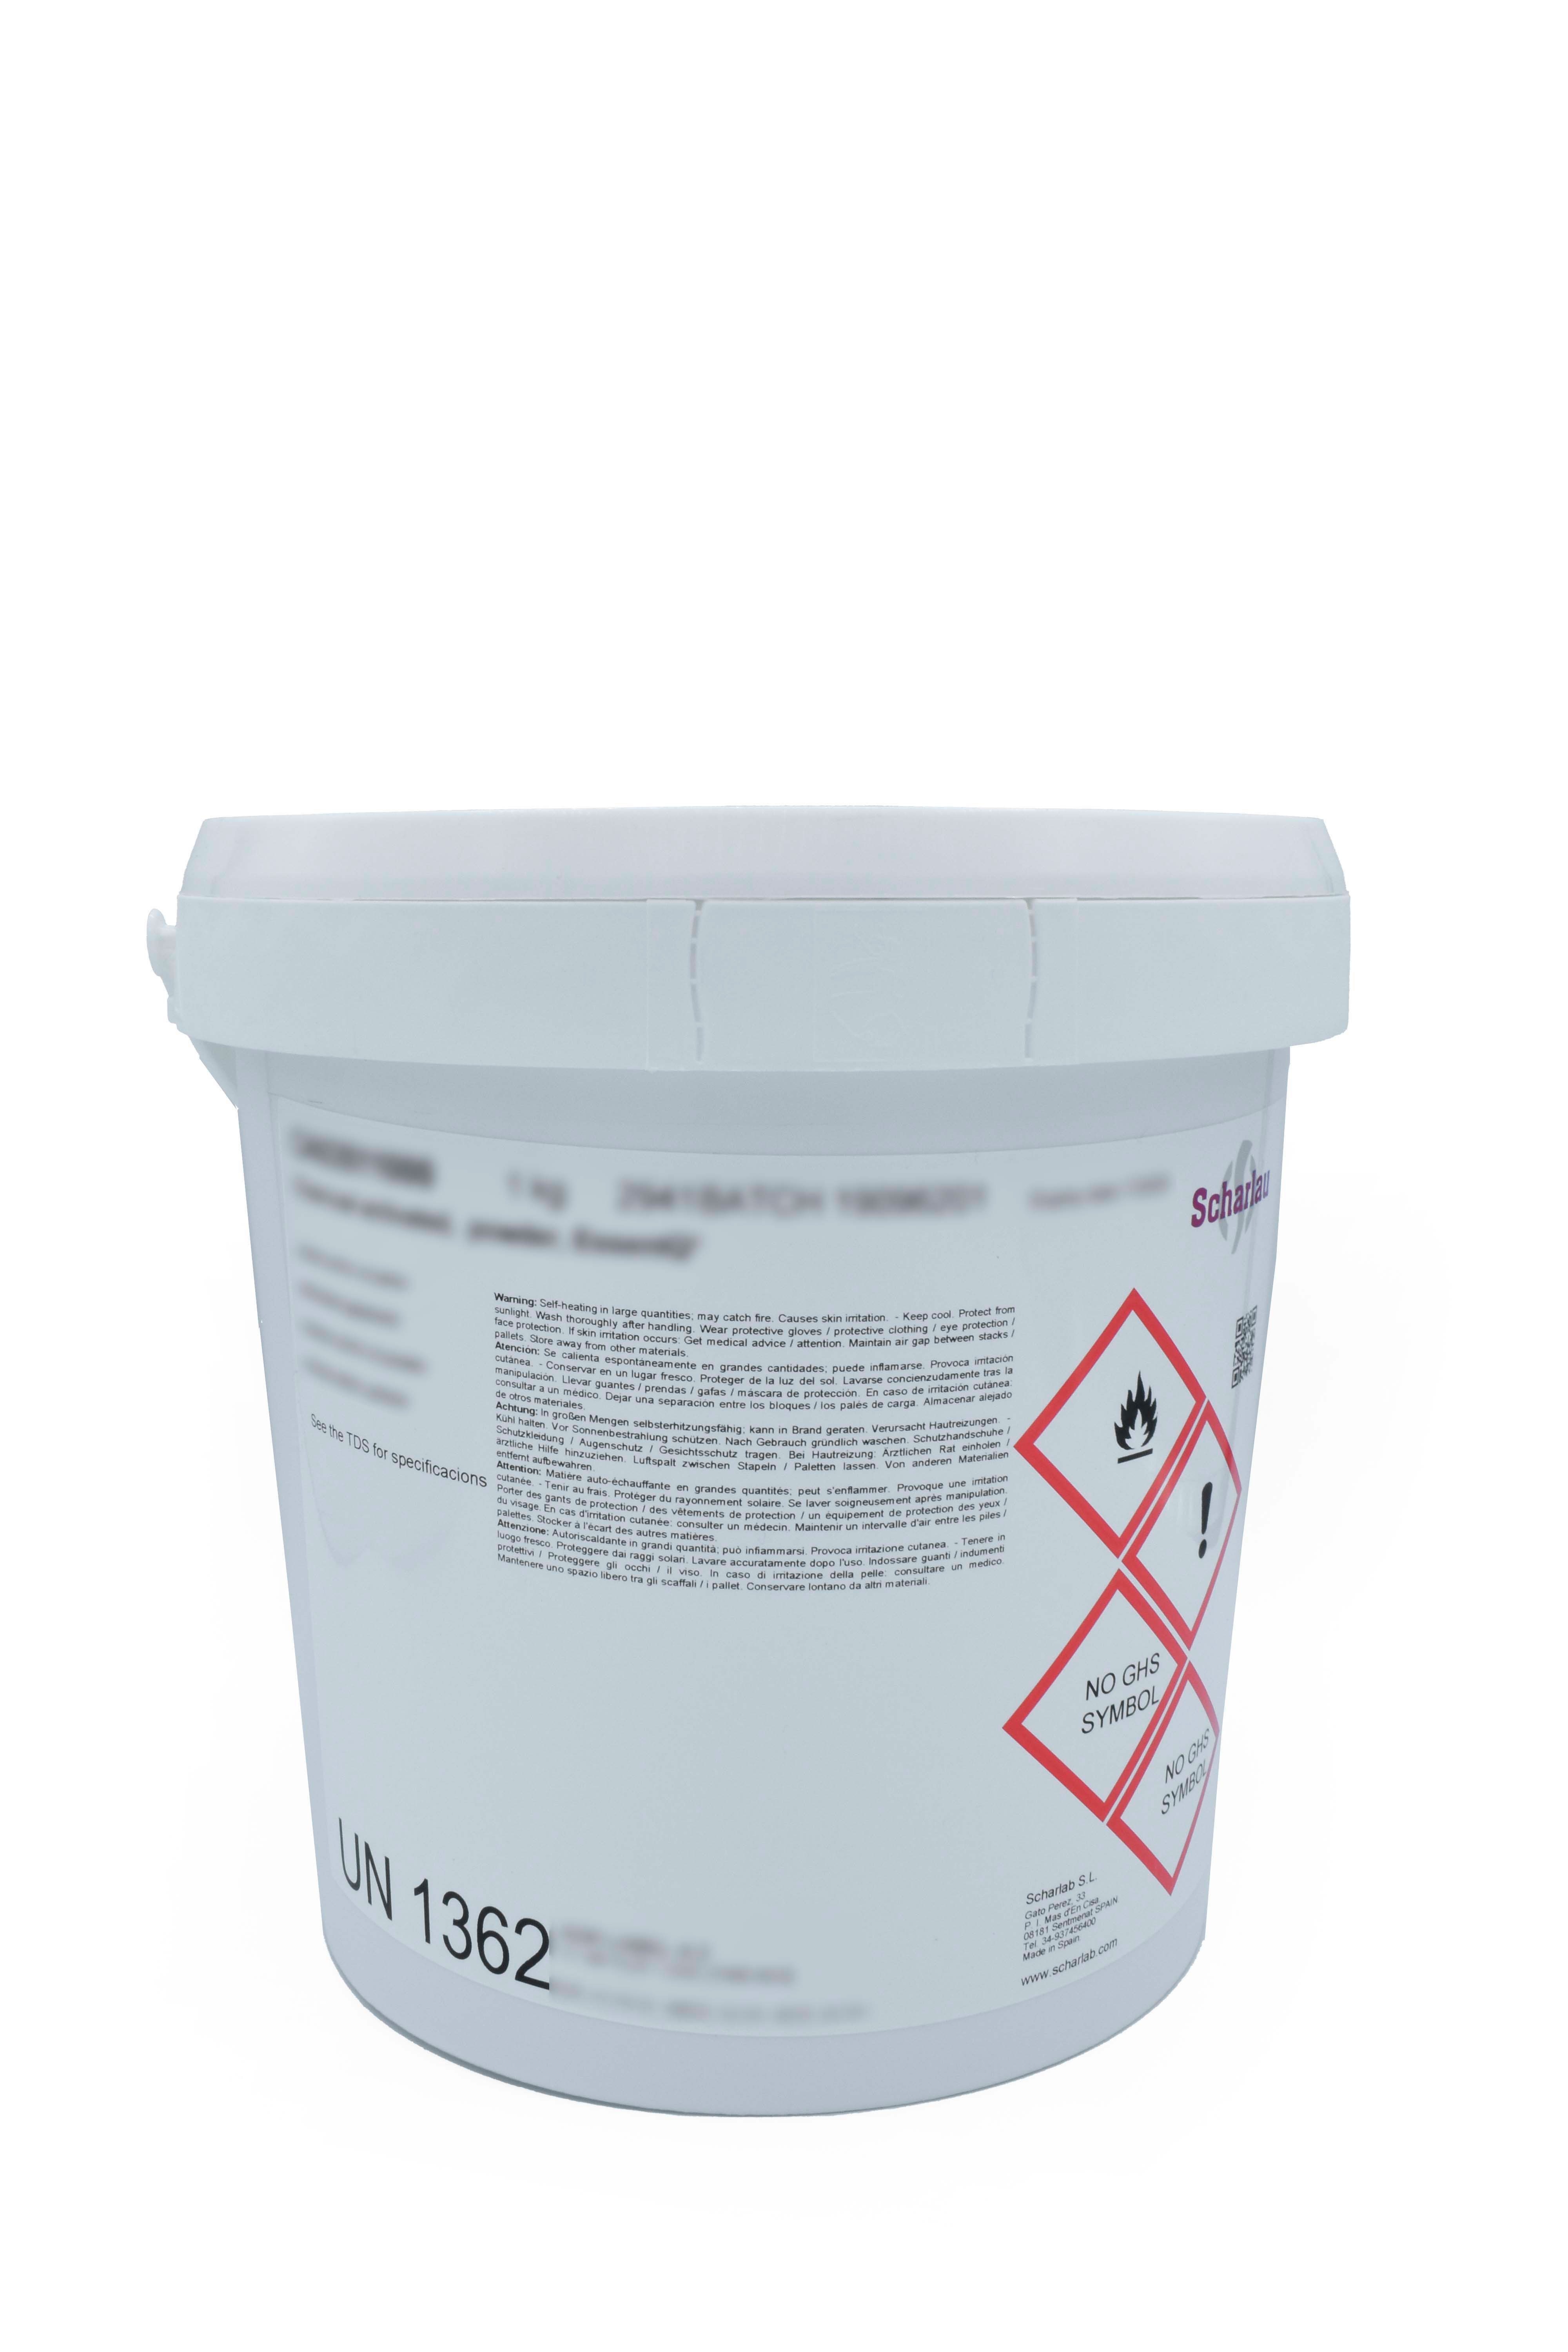 Sodio cloruro, para análisis, ExpertQ®, ACS, ISO, Reag. Ph Eur